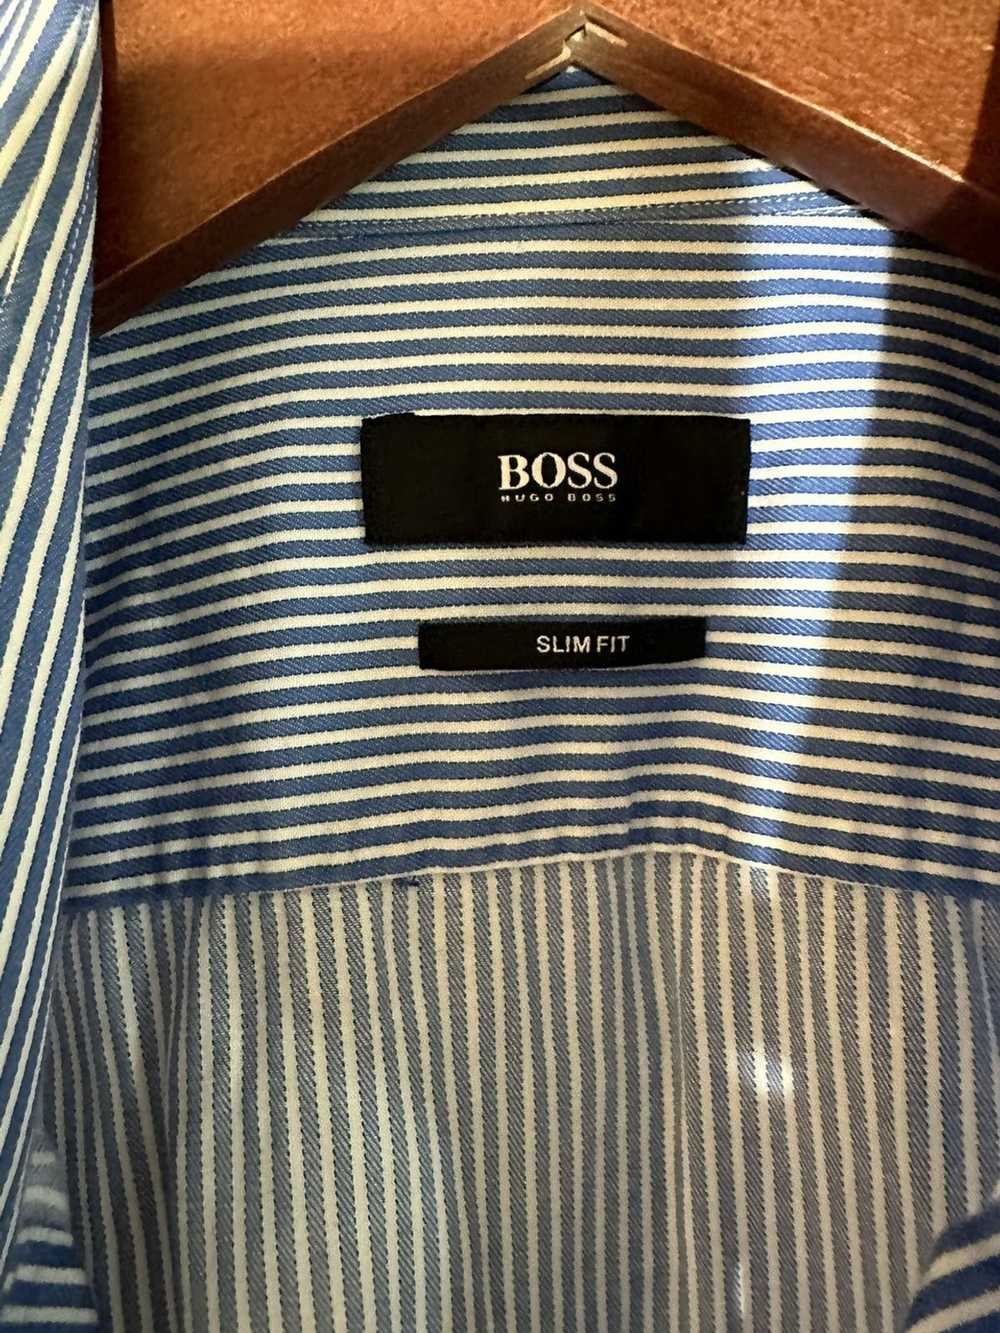 Hugo Boss Striped Boss shirt - image 3